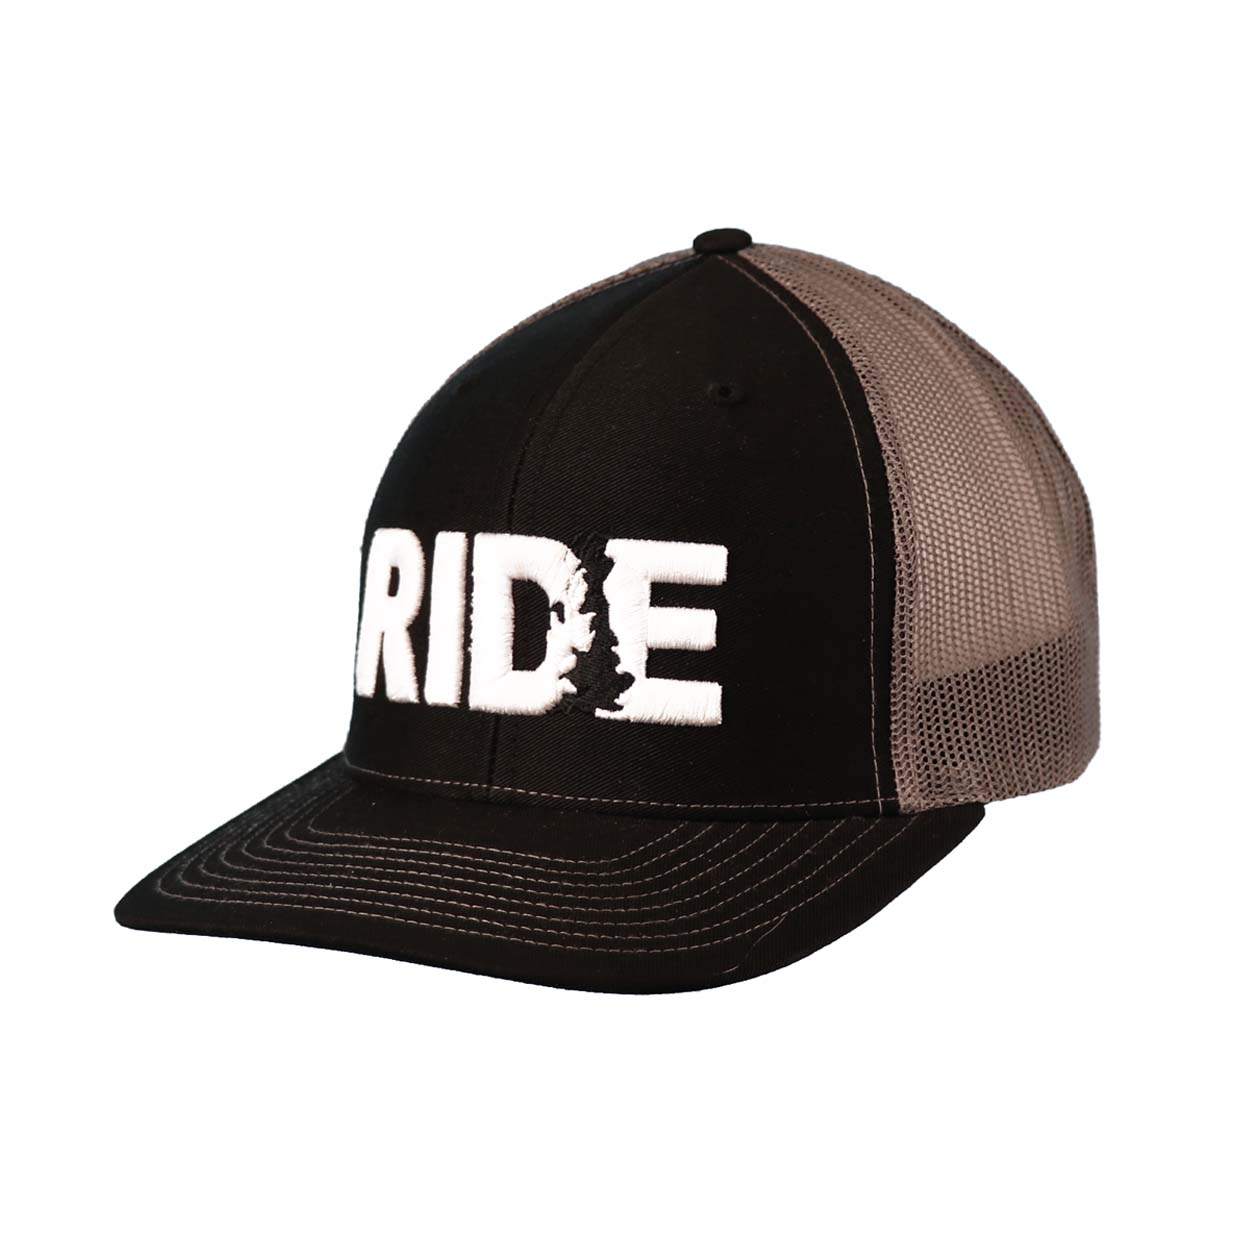 Ride United Kingdom Classic Pro 3D Puff Embroidered Snapback Trucker Hat Black/Gray